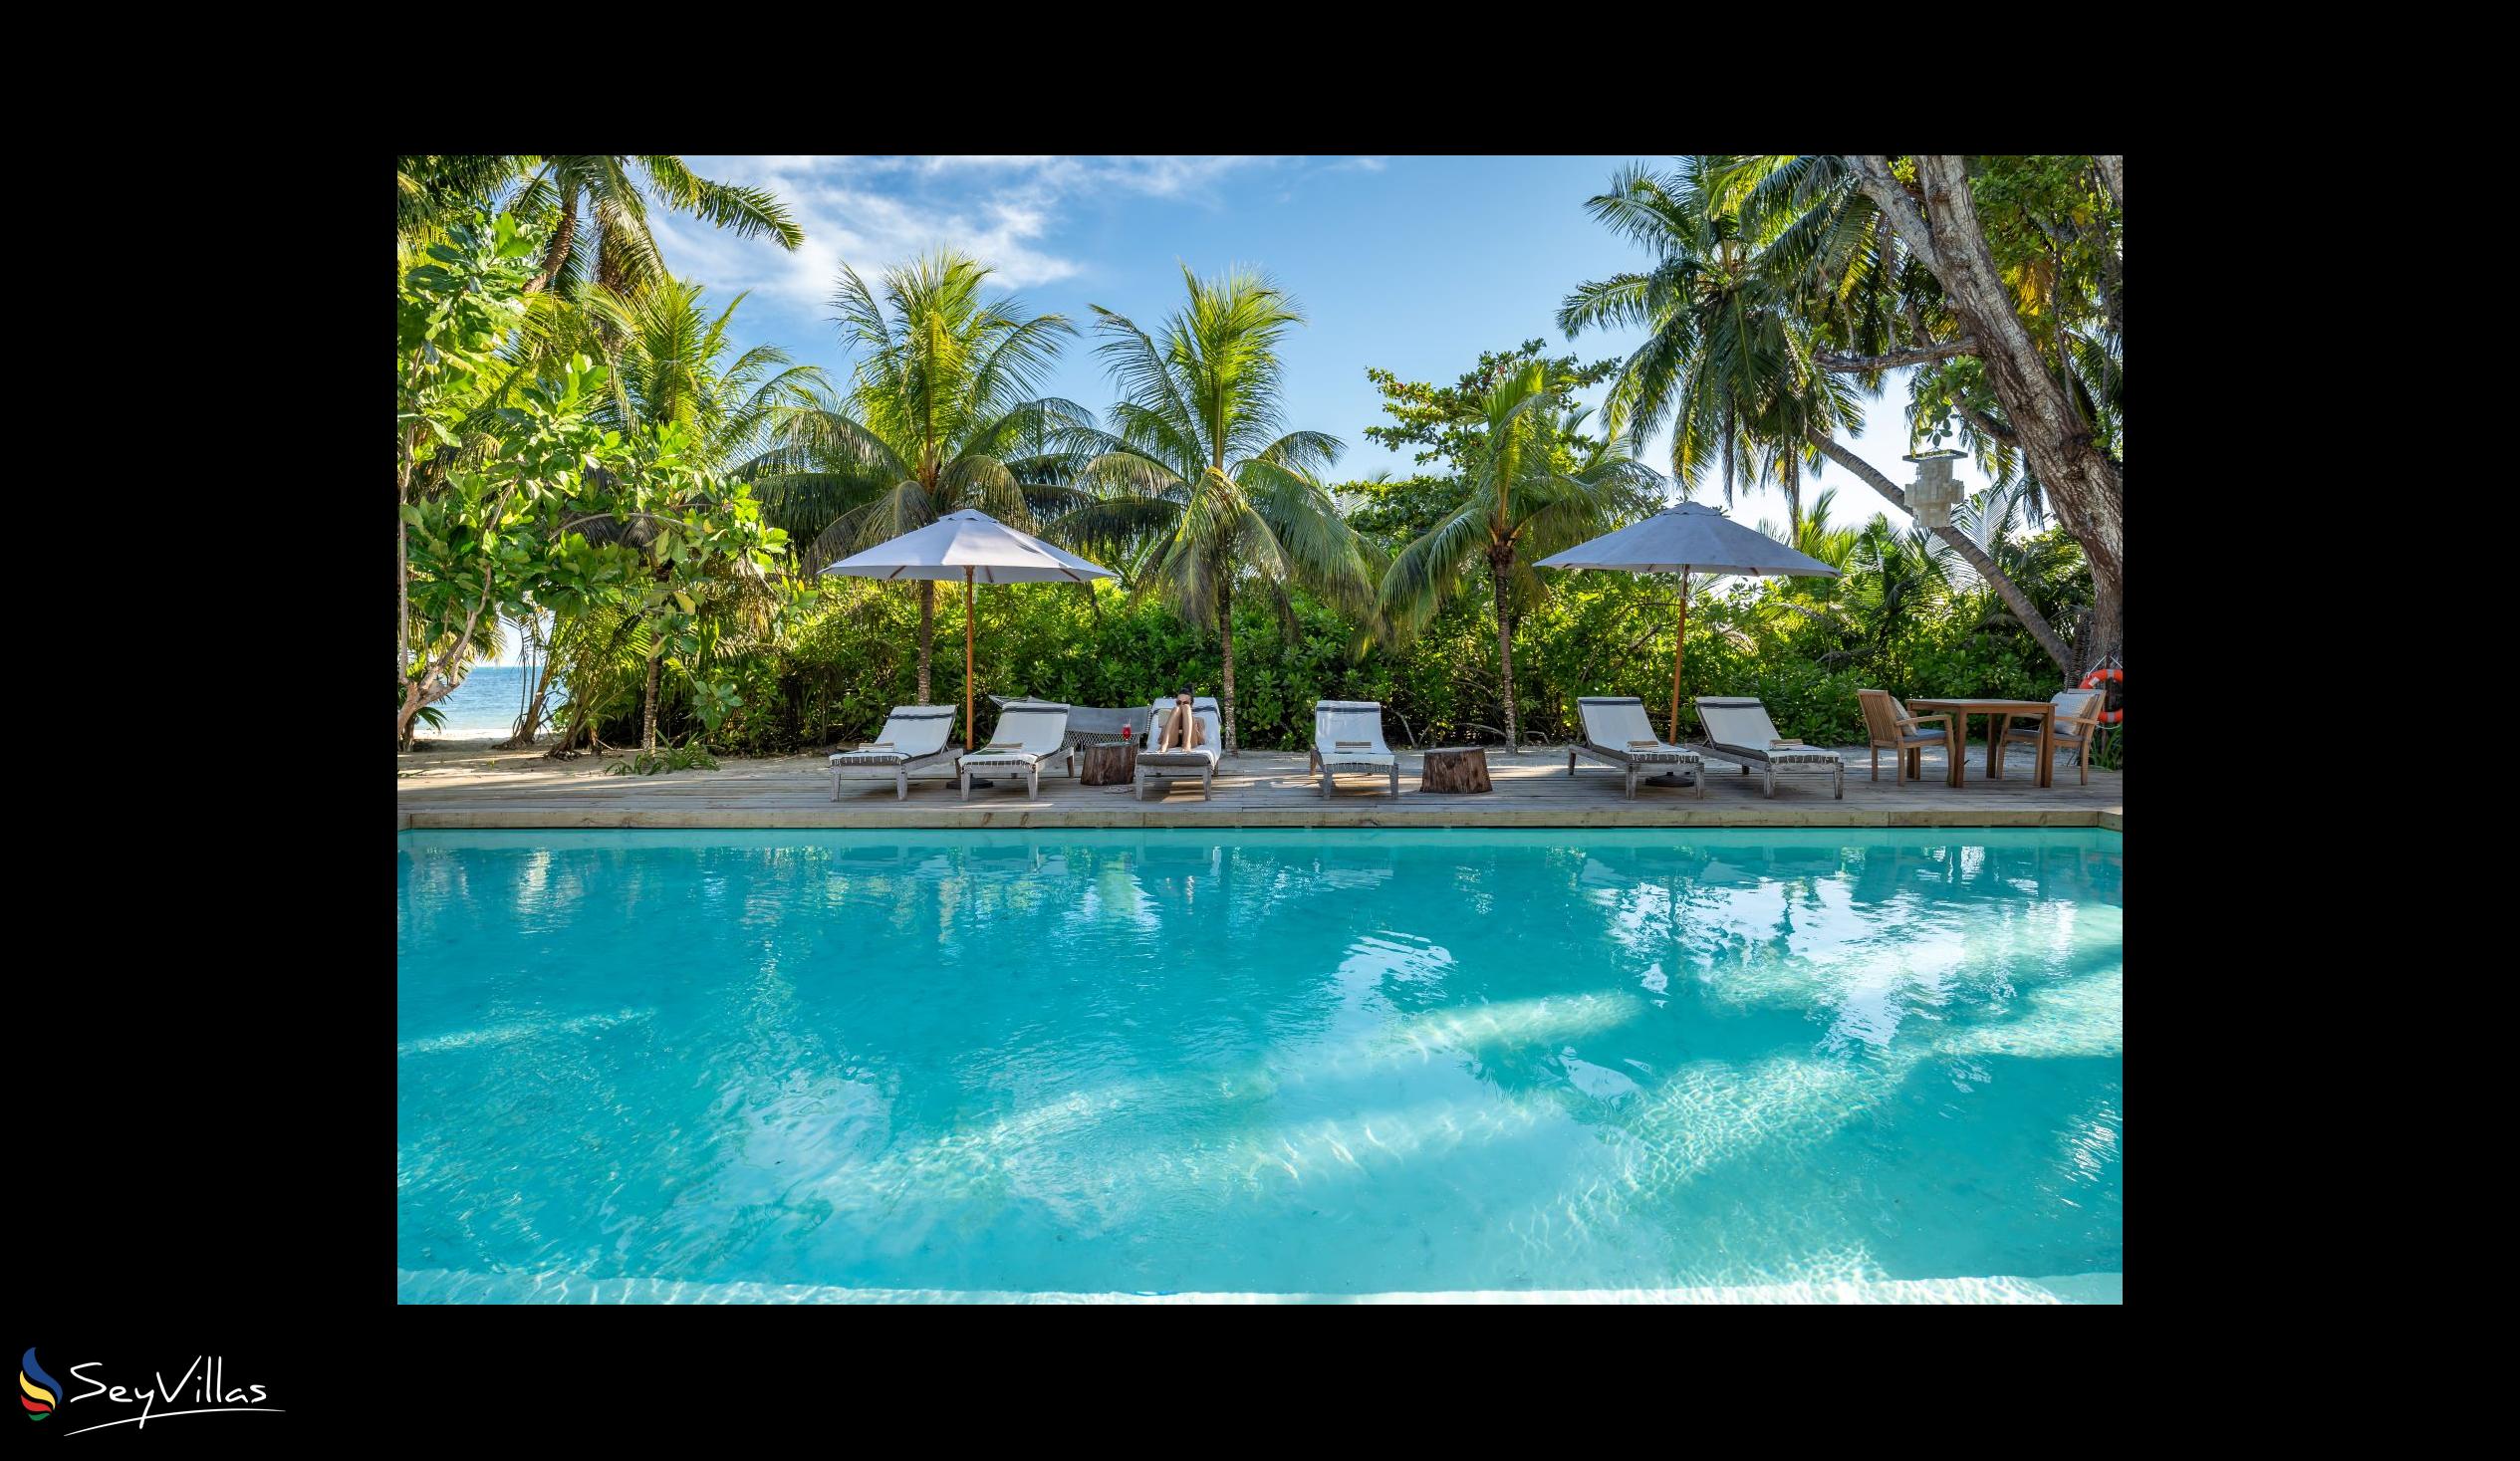 Photo 3: Bliss Hotel Praslin - Outdoor area - Praslin (Seychelles)